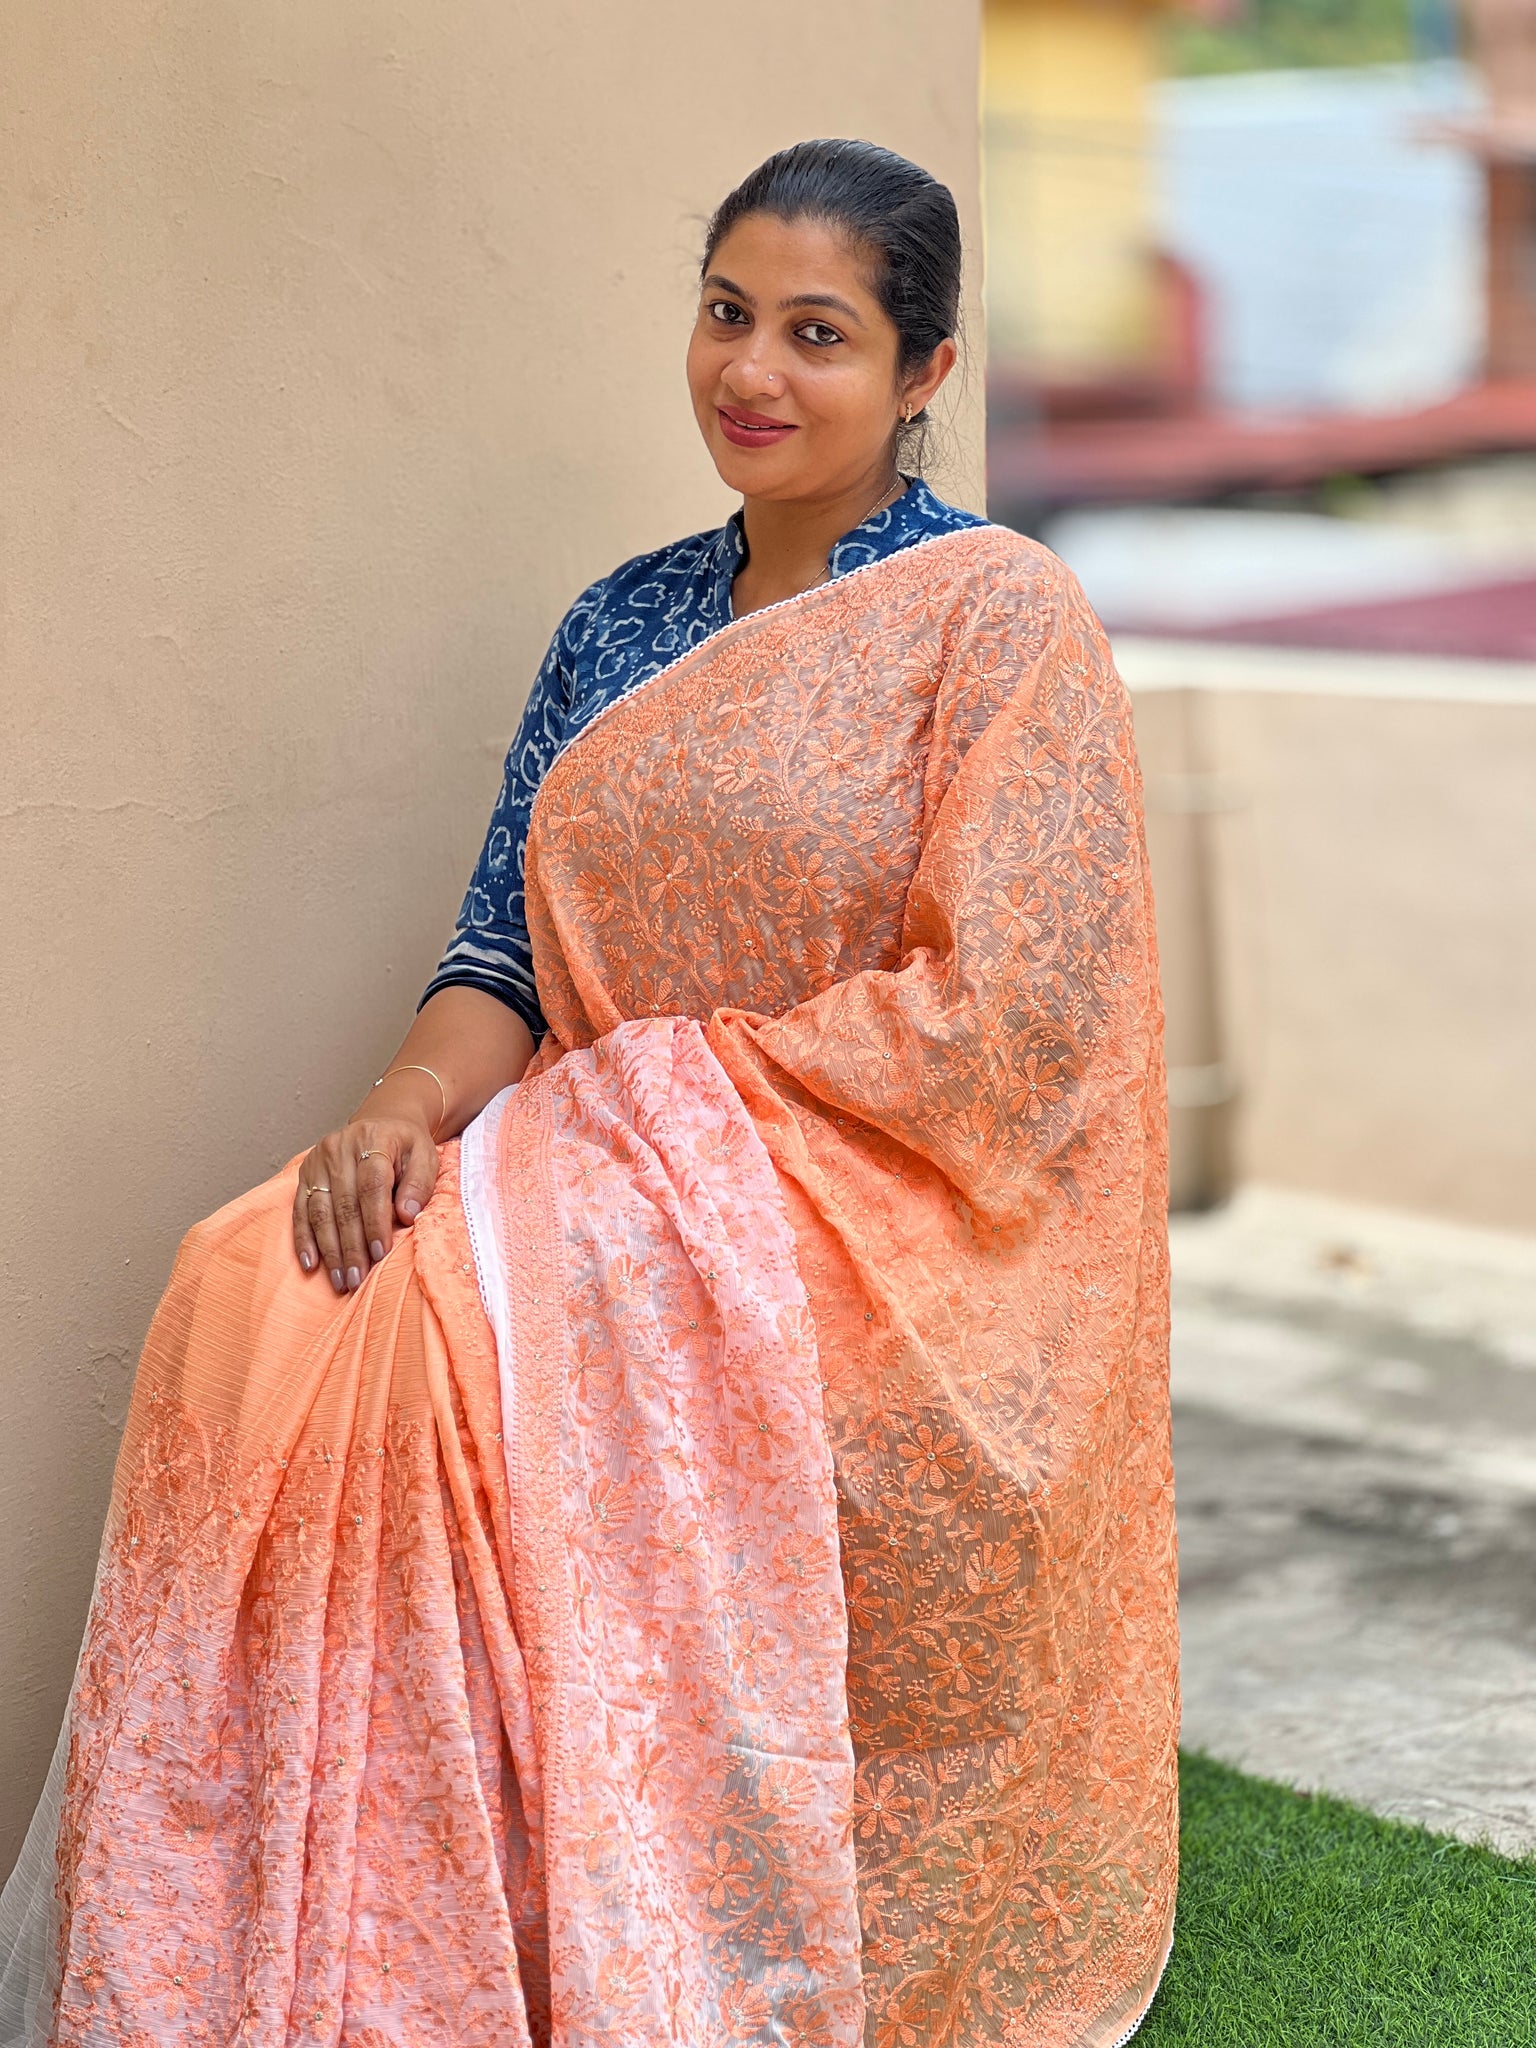 How to use old chiffon sarees in 8 fantastic ways | Fashionworldhub | Long  gown design, Chiffon saree, Long gown